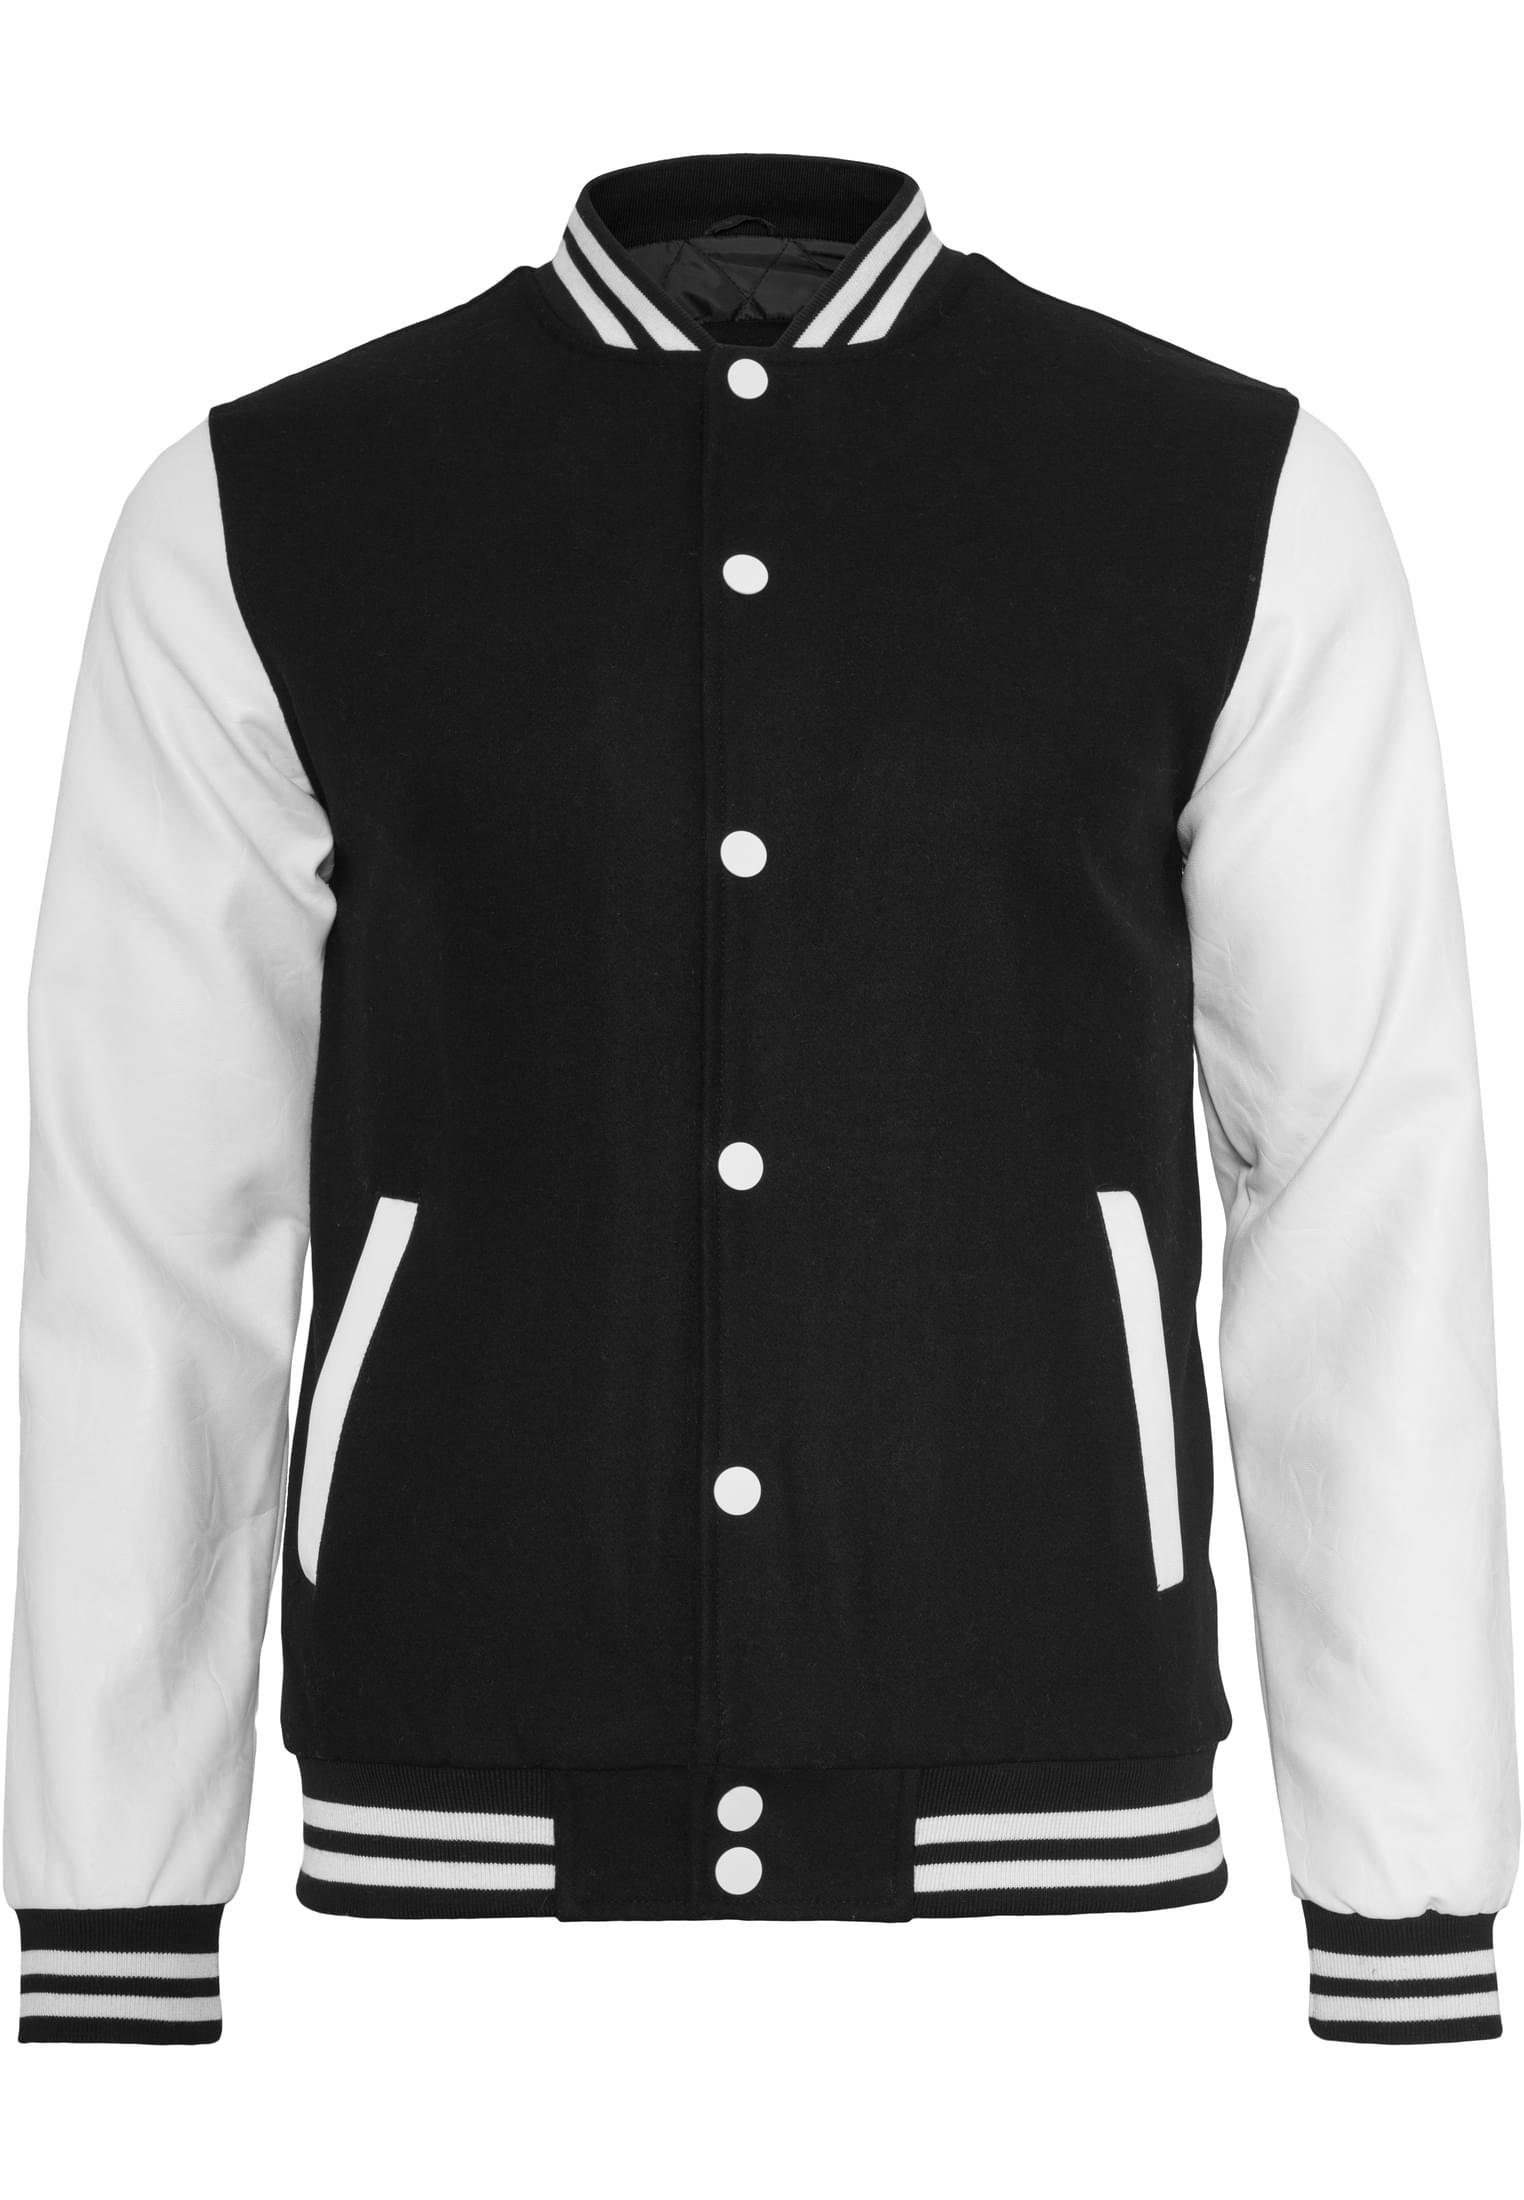 URBAN CLASSICS Outdoorjacke Herren Oldschool College Jacket (1-St) black/white